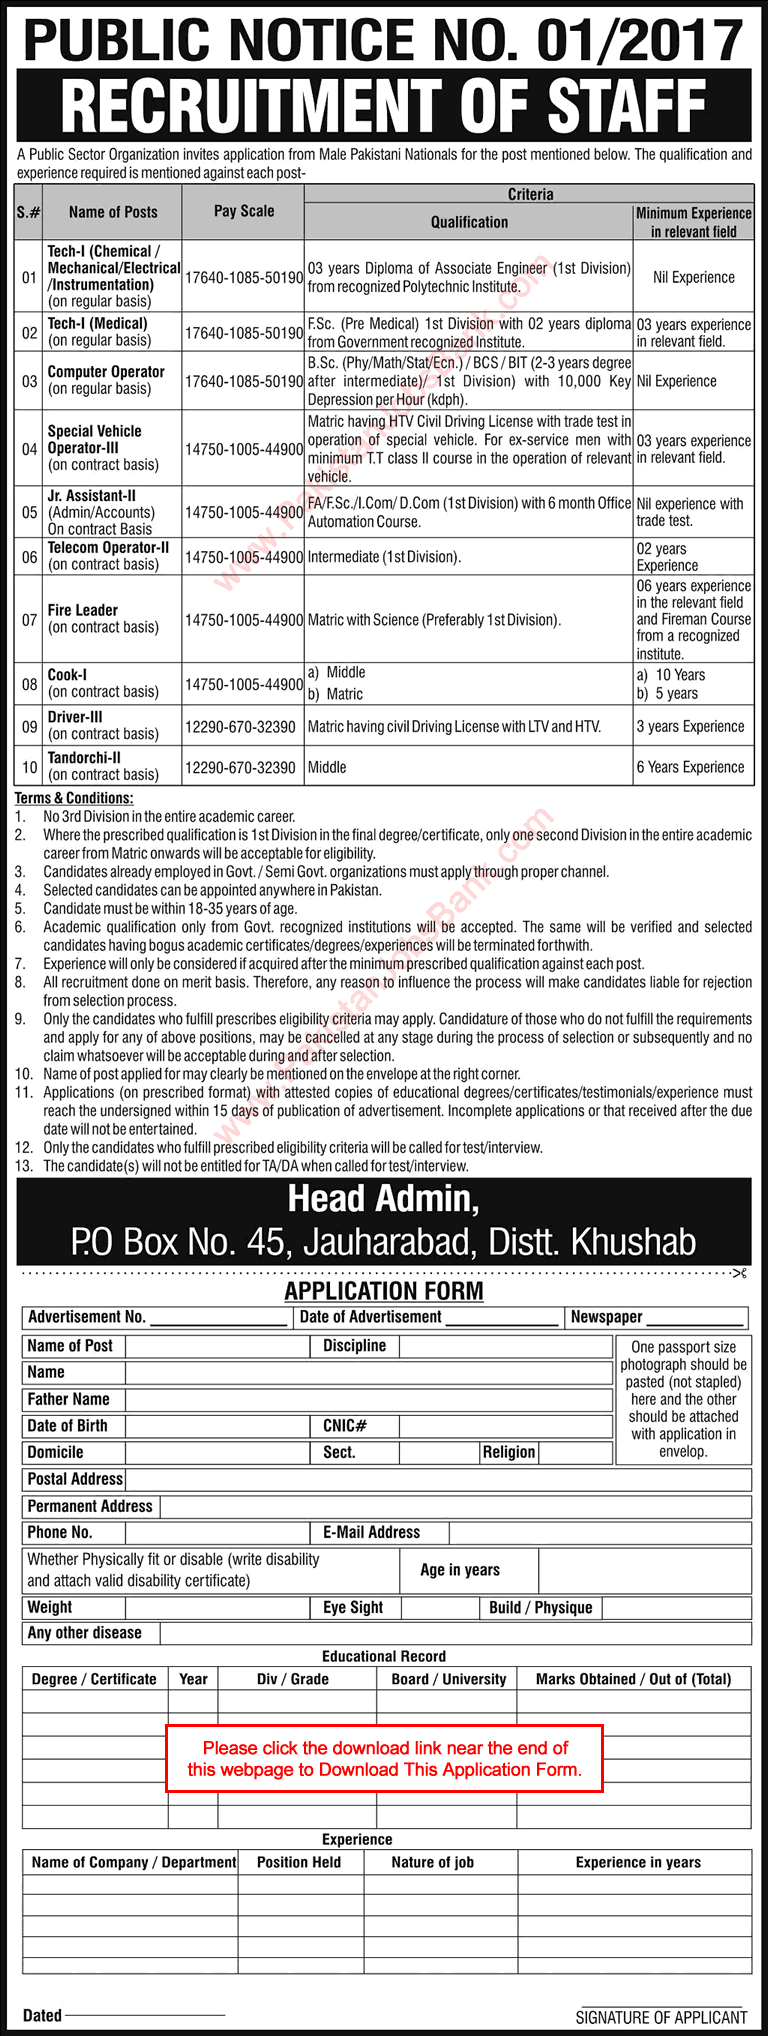 PO Box 45 Jauharabad Jobs 2017 Khushab PAEC Application Form Technicians, Junior Assistants & Others Latest